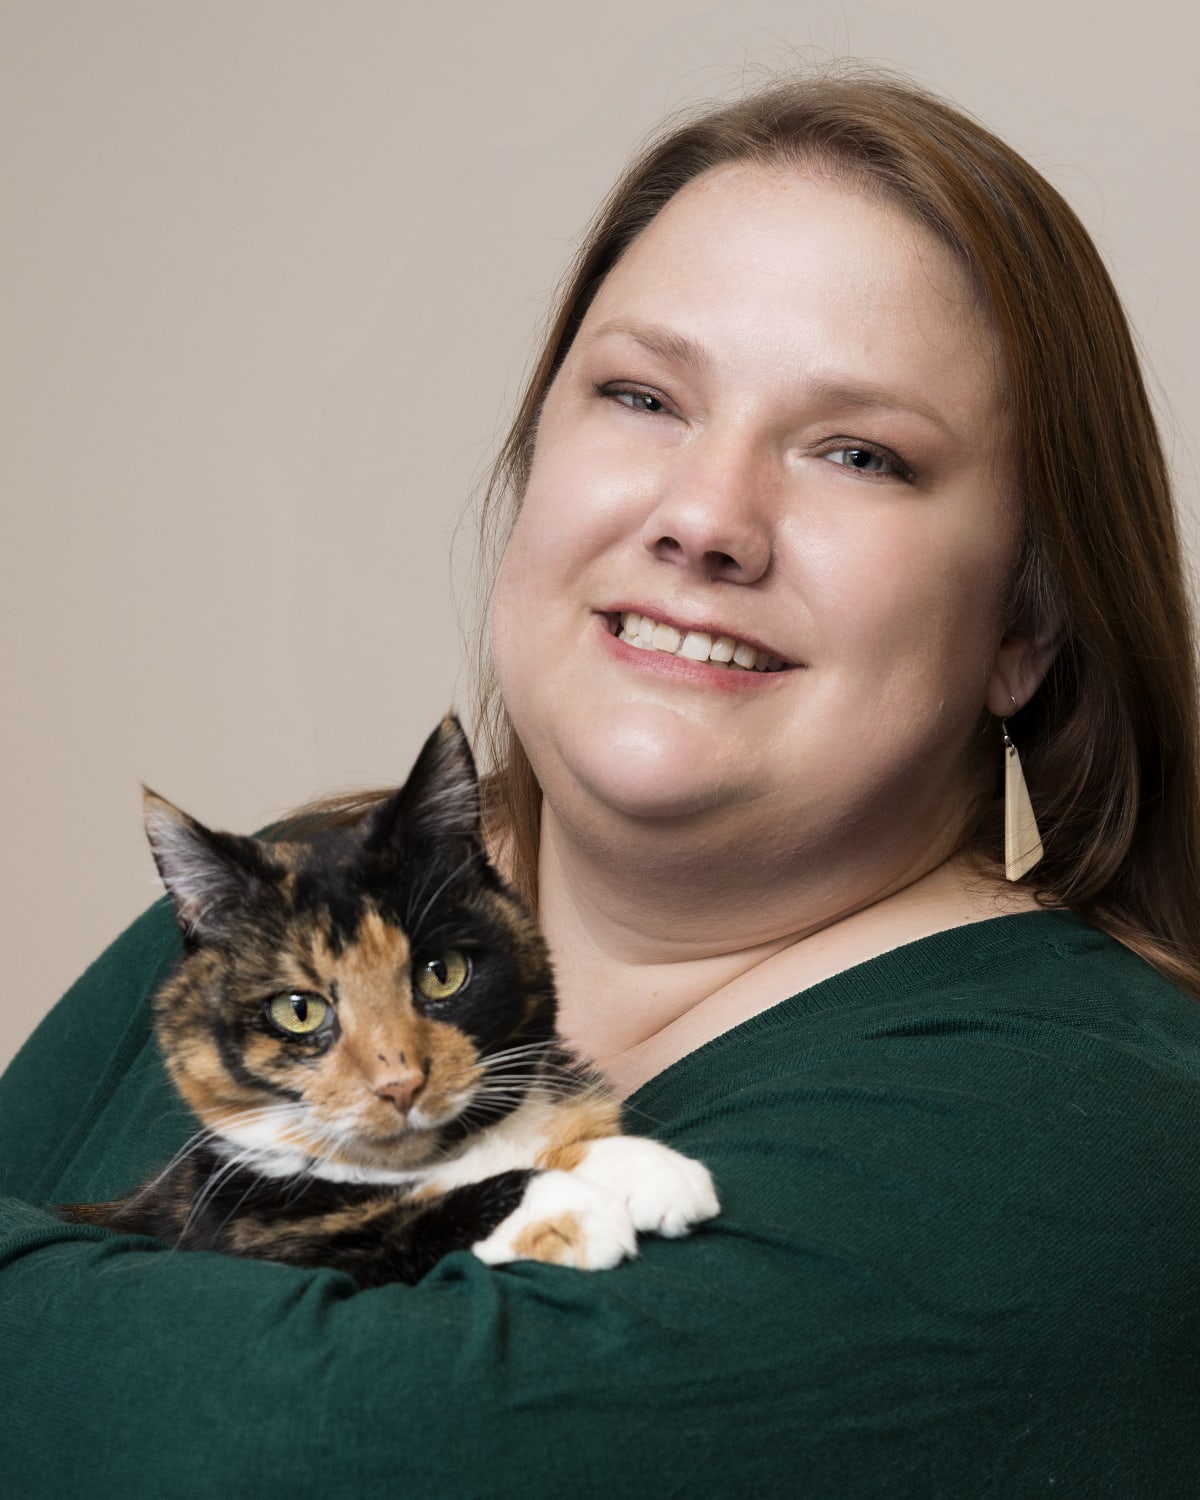 A headshot of Karen Green wearing a green shirt and holding a calico cat.